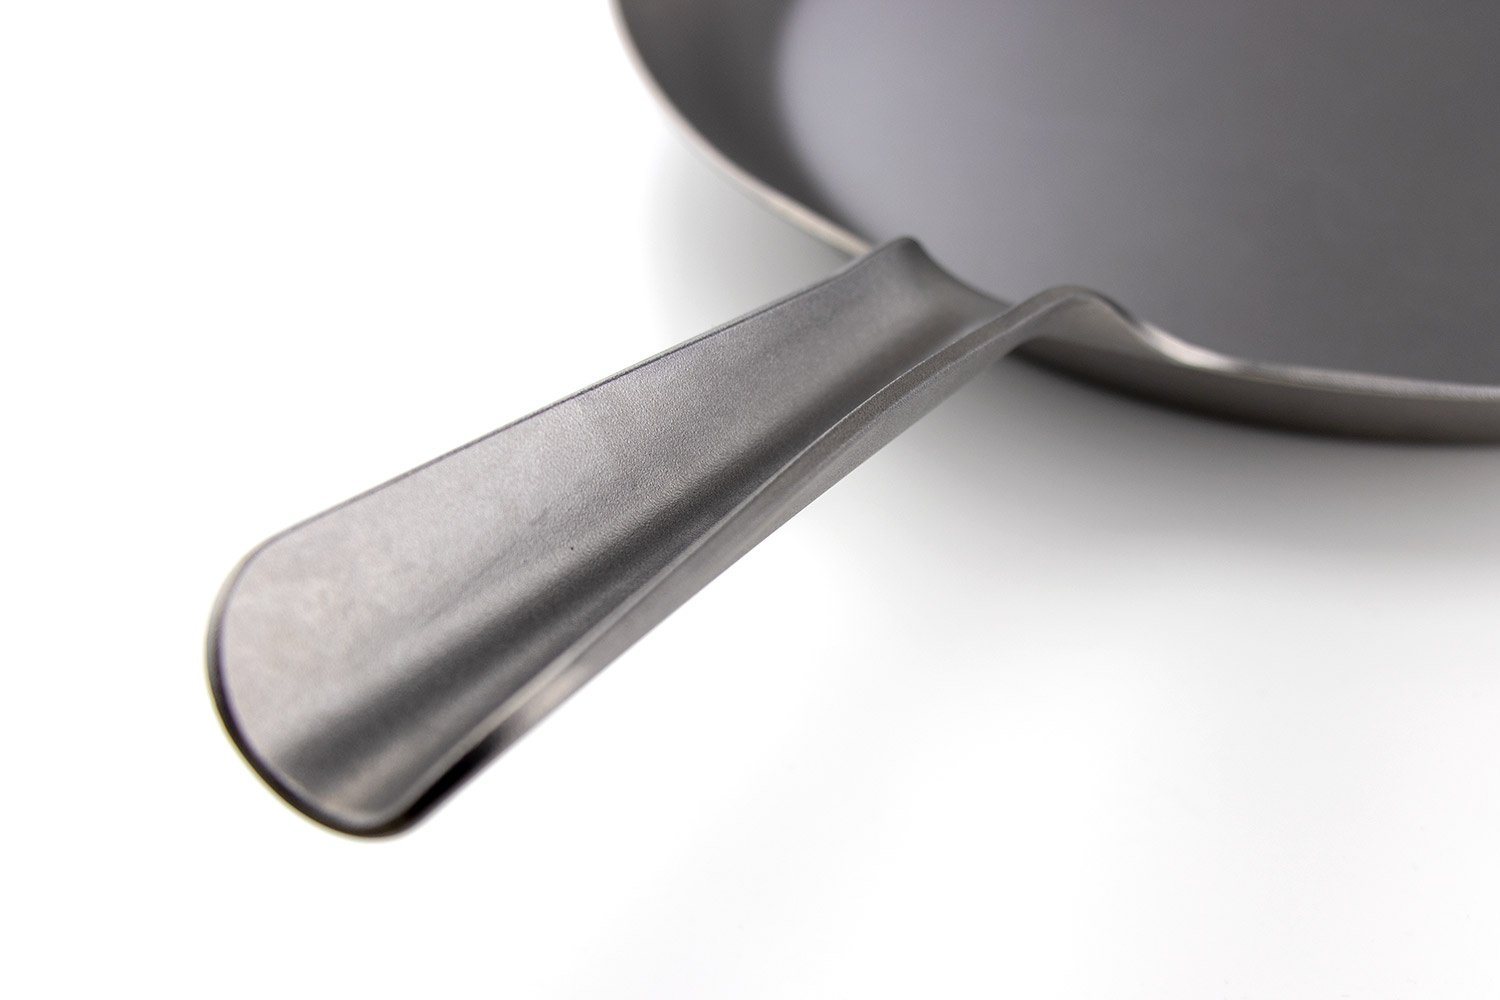 West Japan Tools Carbon Steel Skillet 30cm